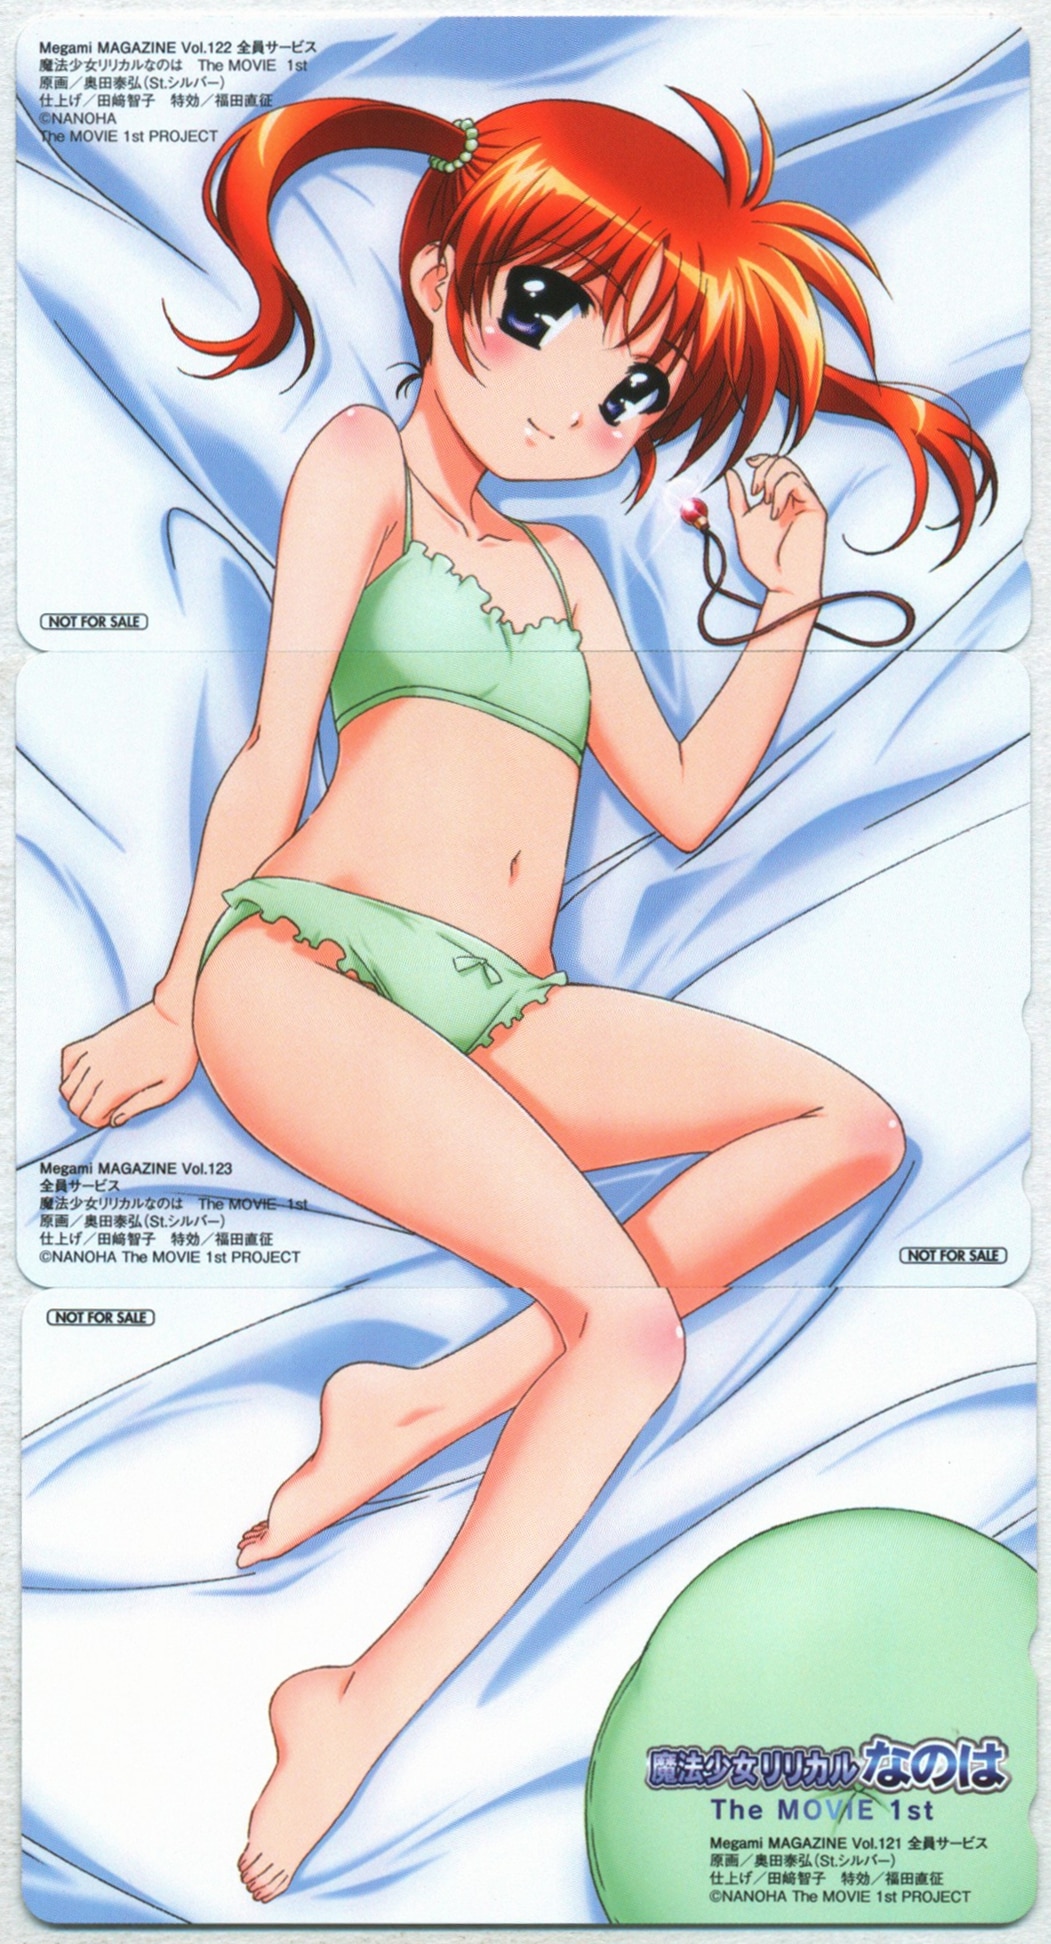 Megami Magazine Vol121 122 123 All Support Nanoha Takamachi 3 Piece Set Telephone Card Teleca Mandarake Online Shop